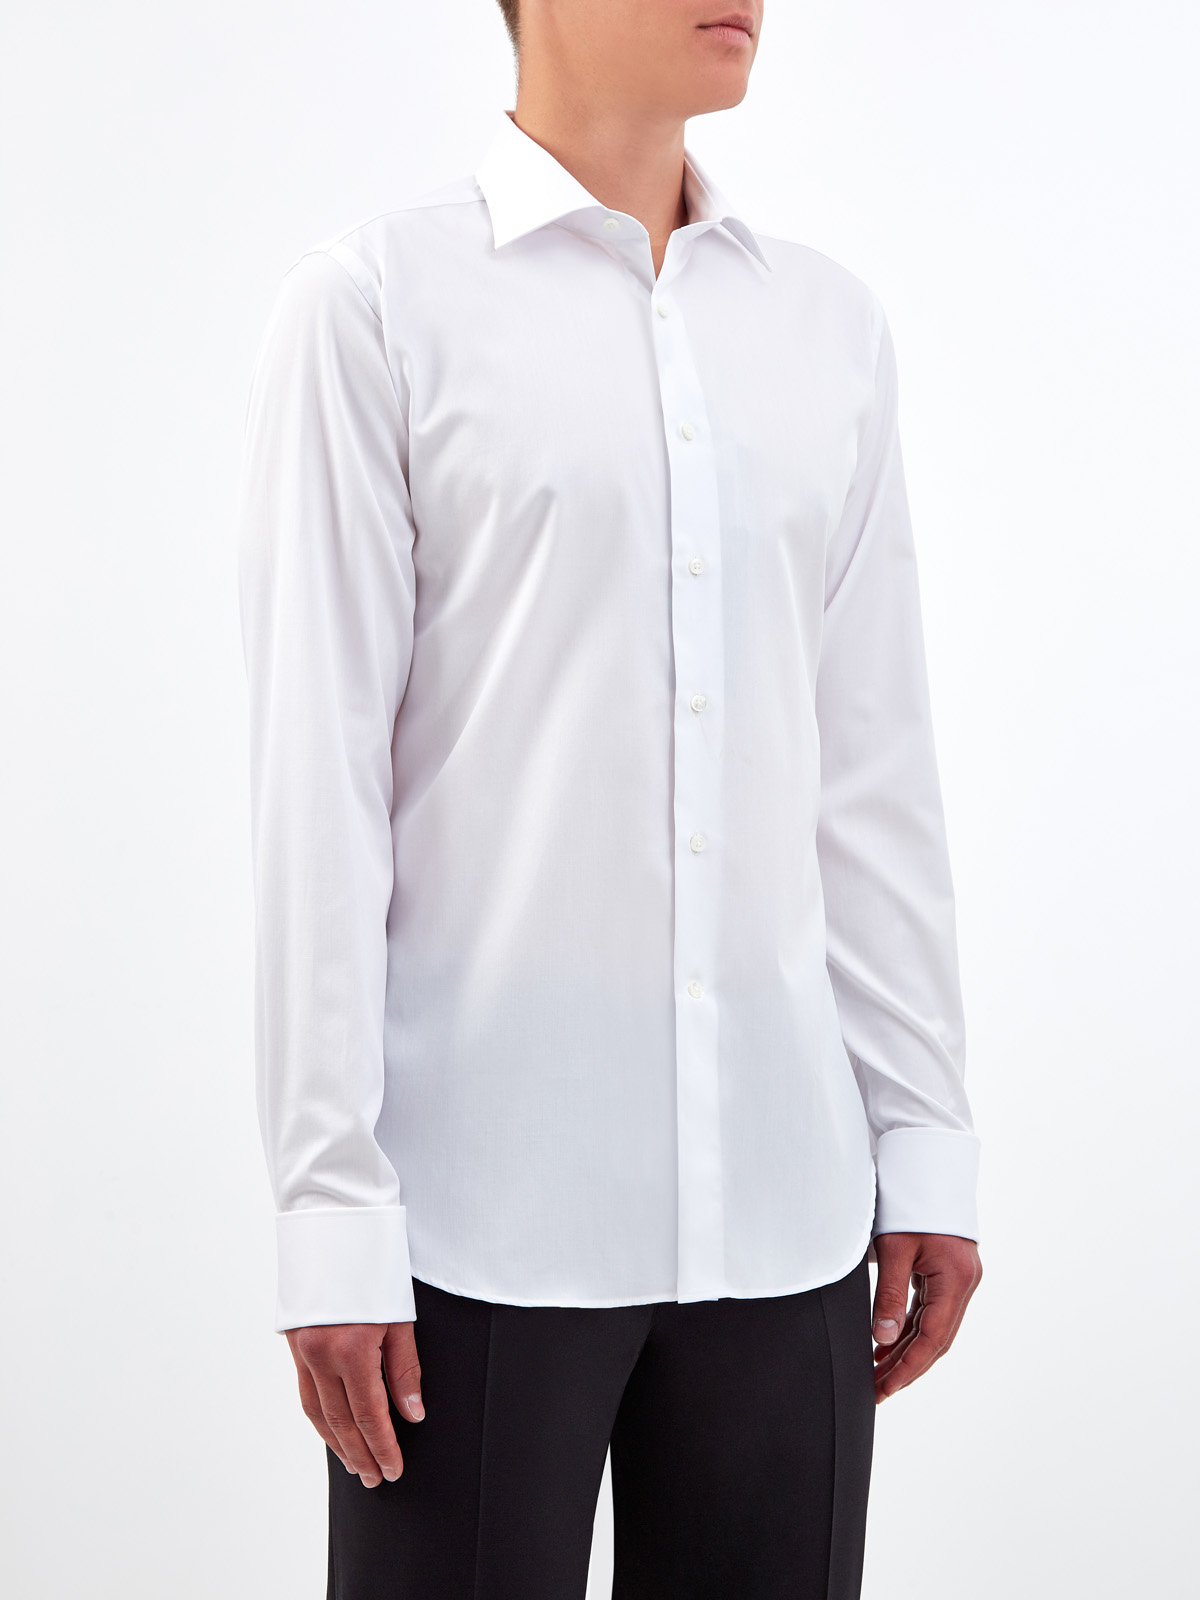 Рубашка из поплина Impeccabile с манжетами под запонки CANALI, цвет белый, размер 52;54;56;58;52 - фото 3